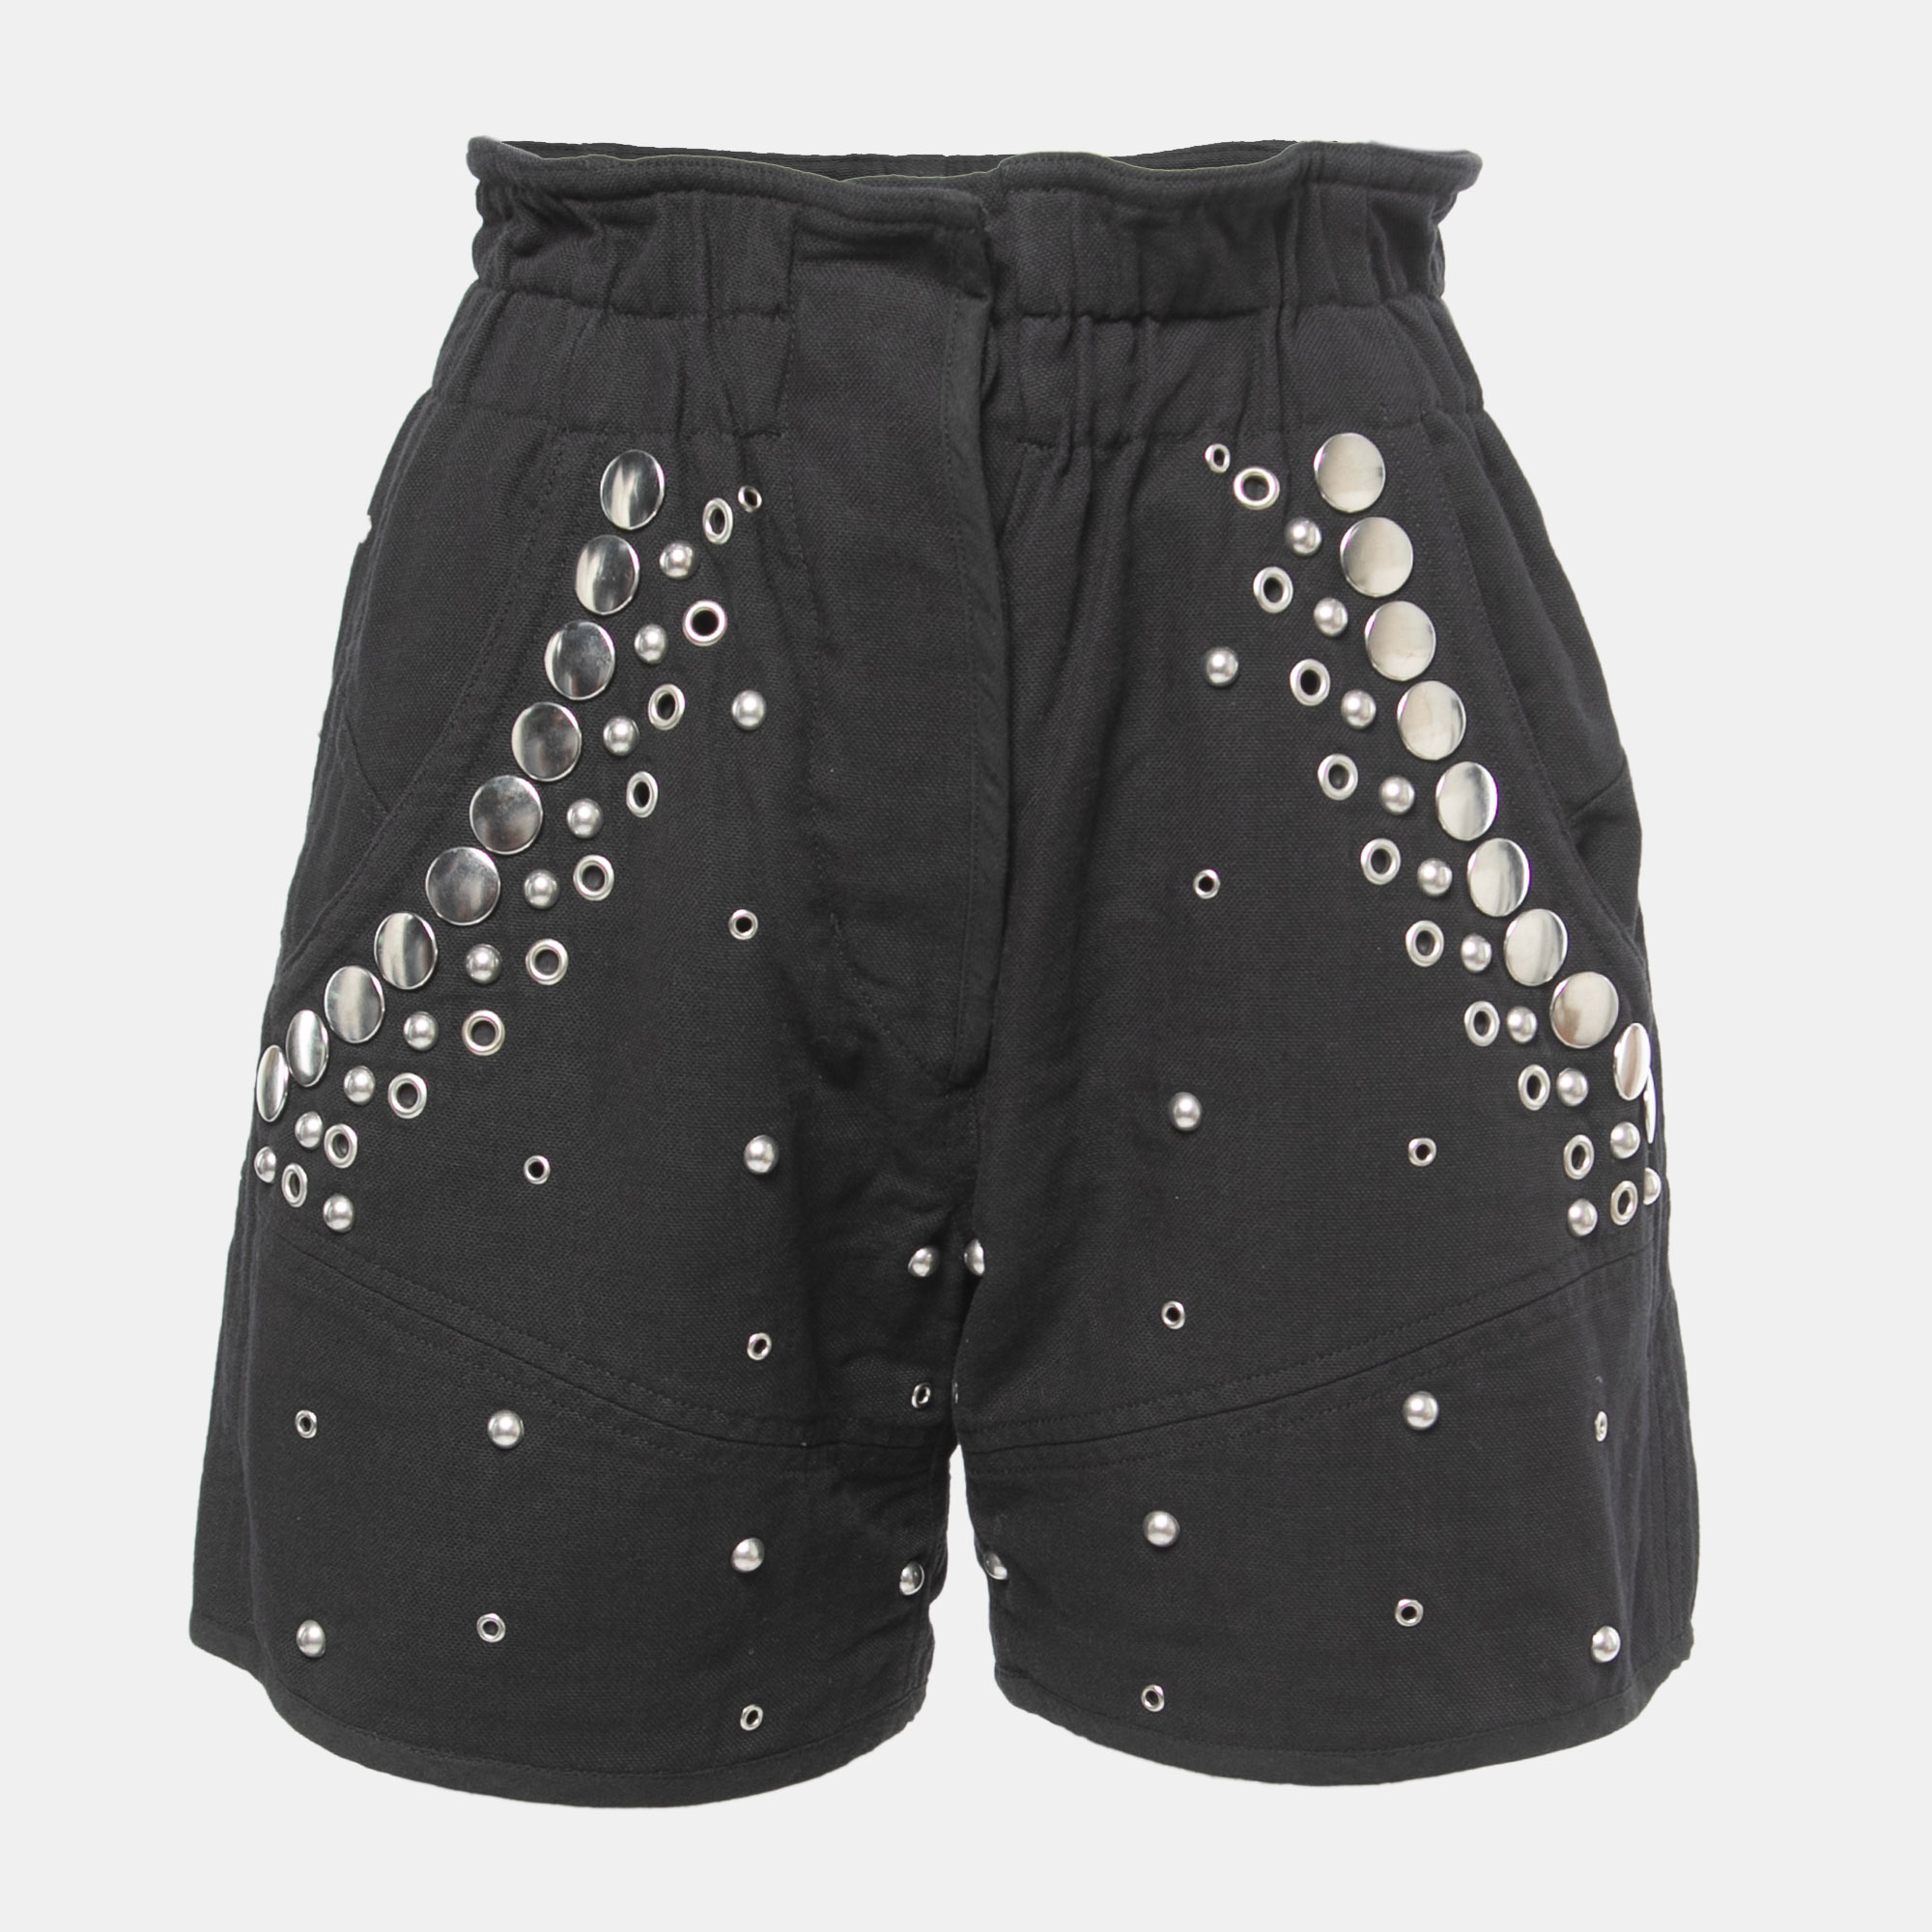 Iabel Marant Black Studded Cotton Paper Bag Shorts S